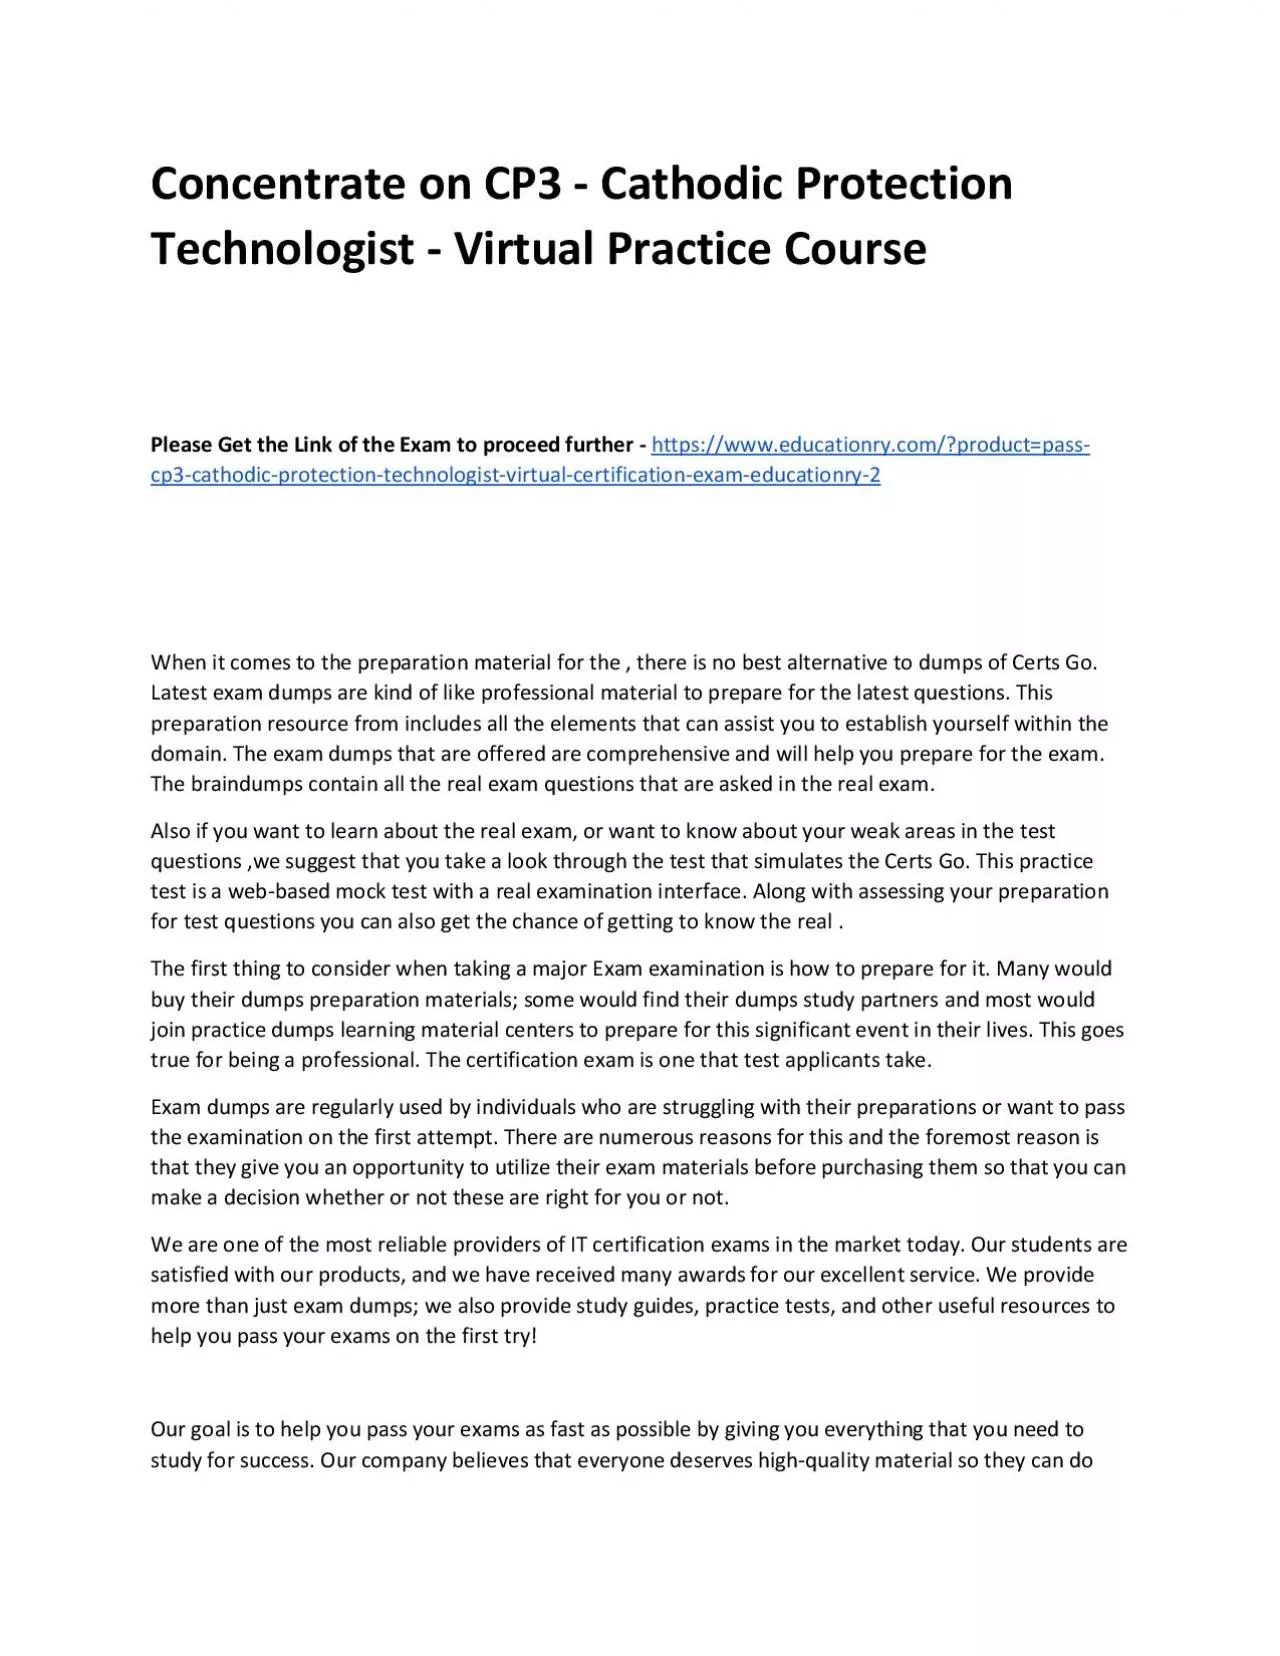 CP3 - Cathodic Protection Technologist - Virtual